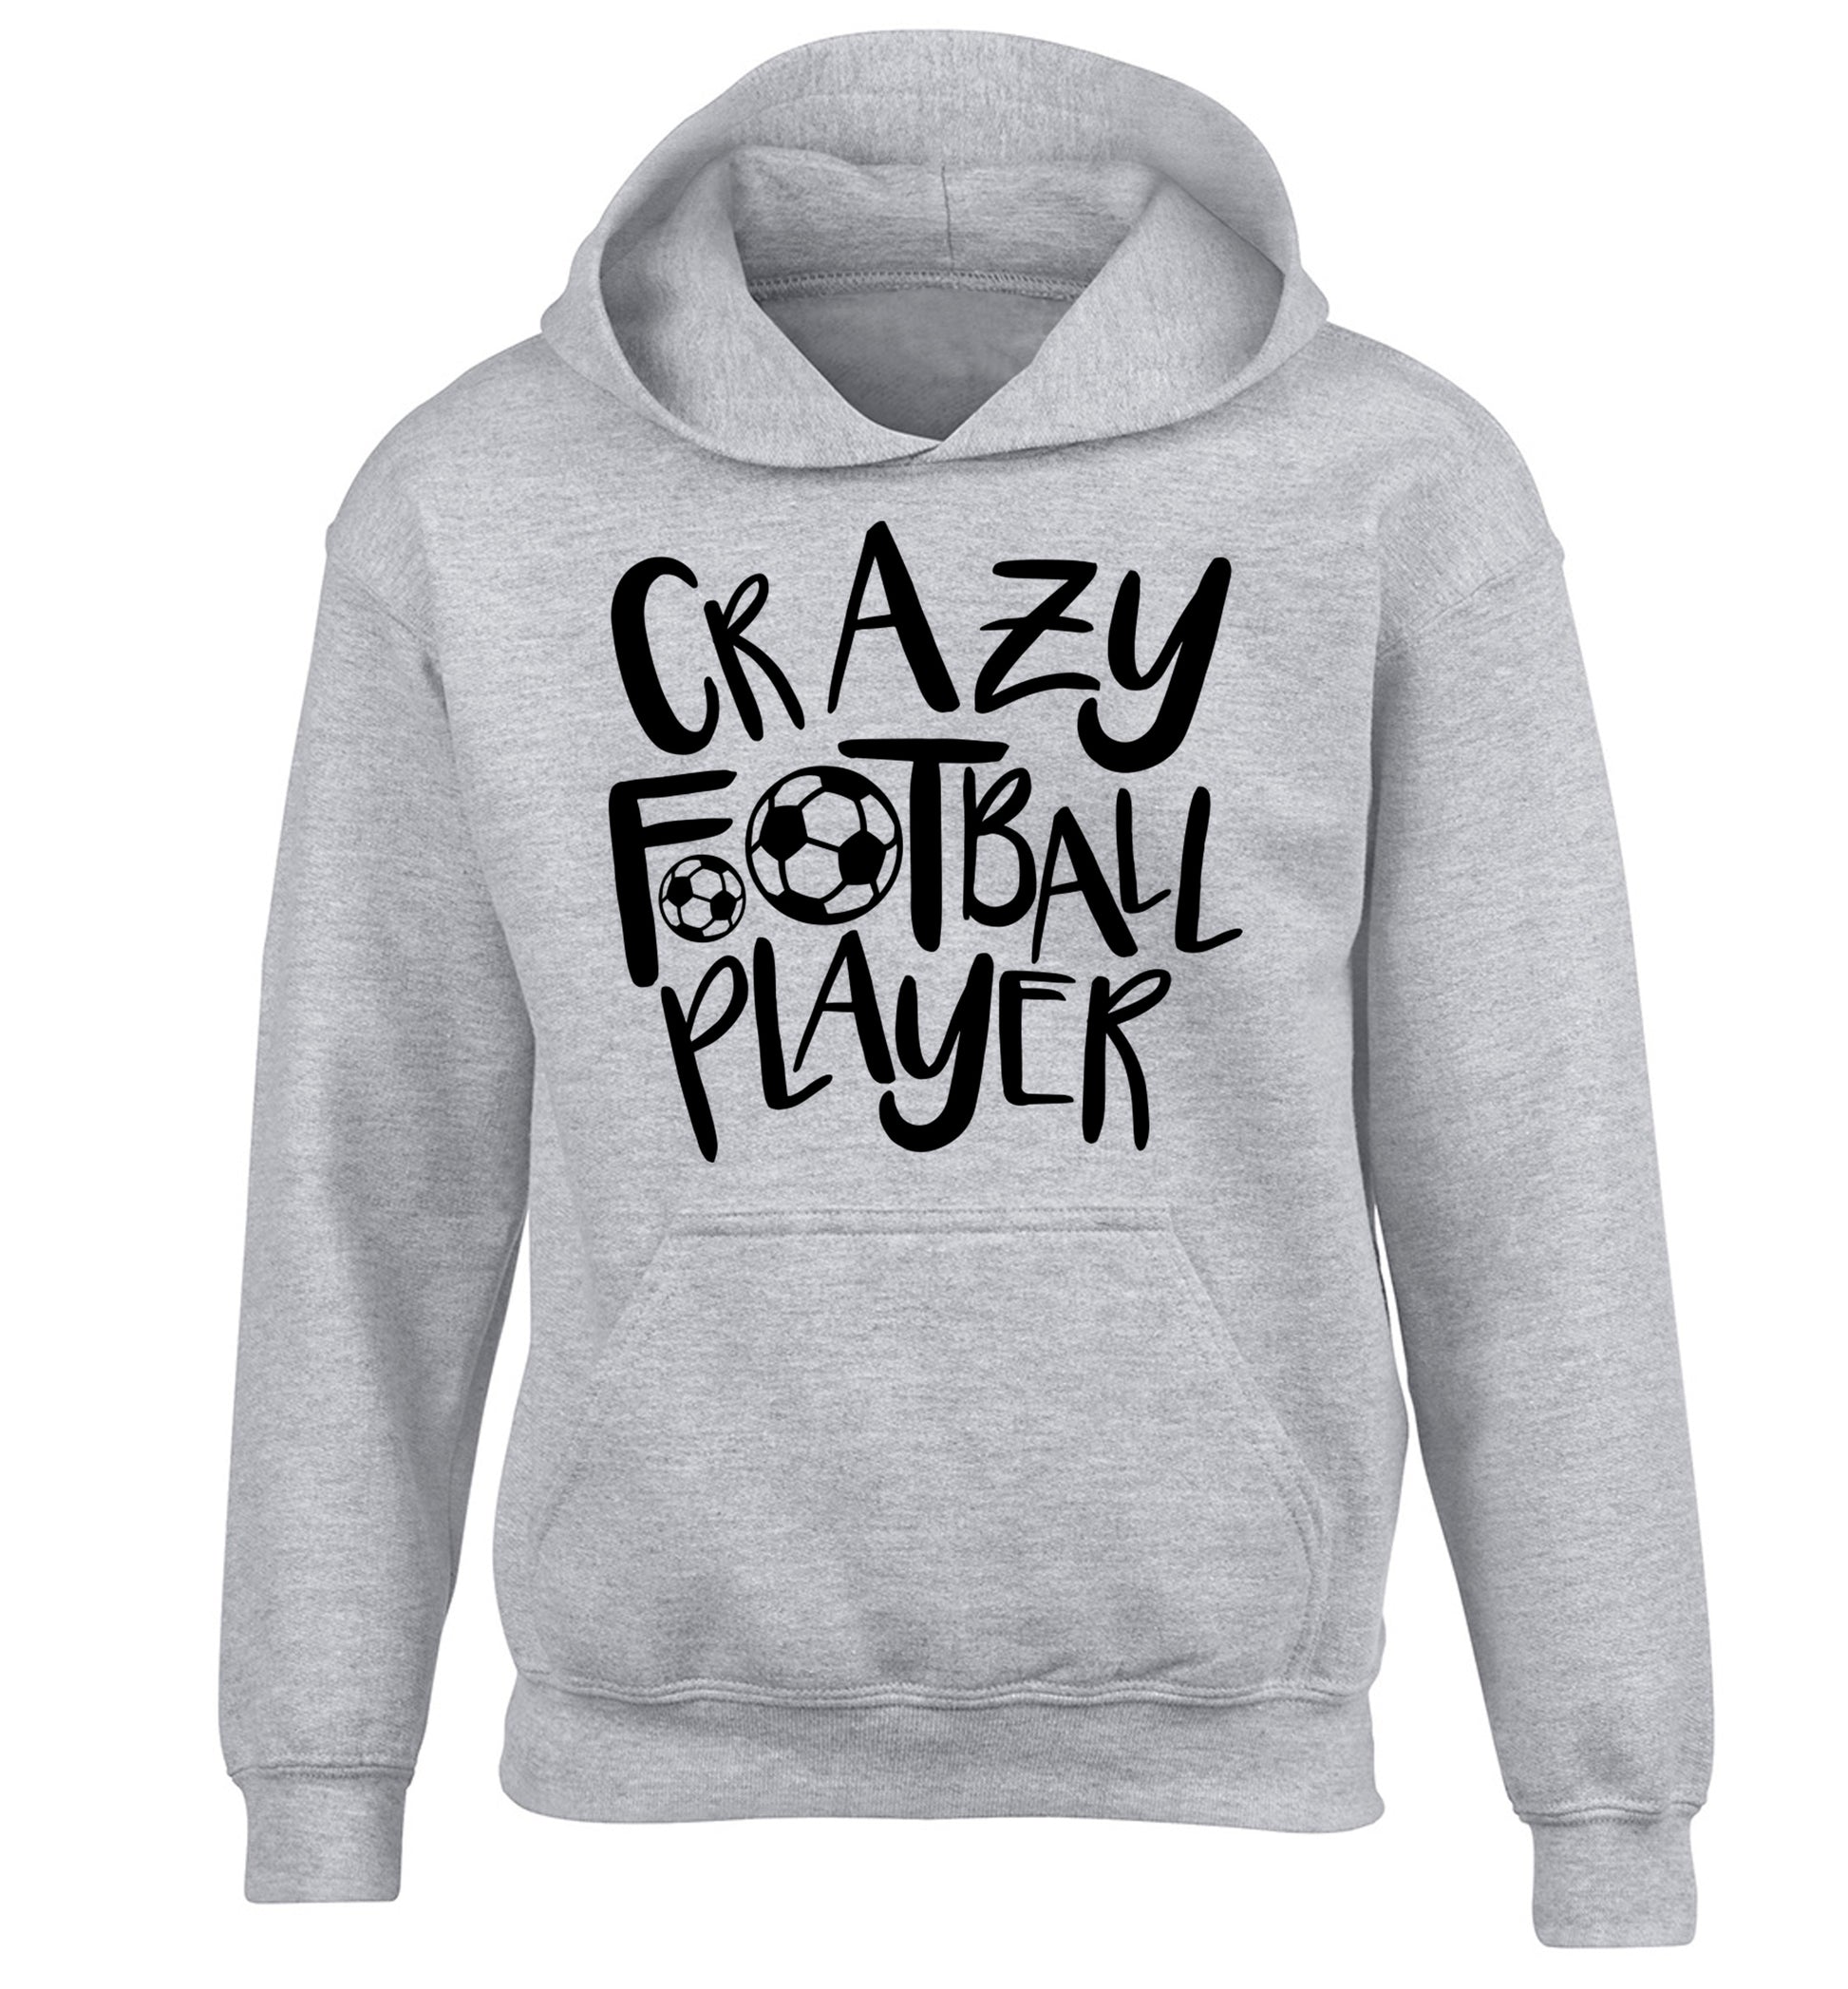 Crazy football player children's grey hoodie 12-14 Years